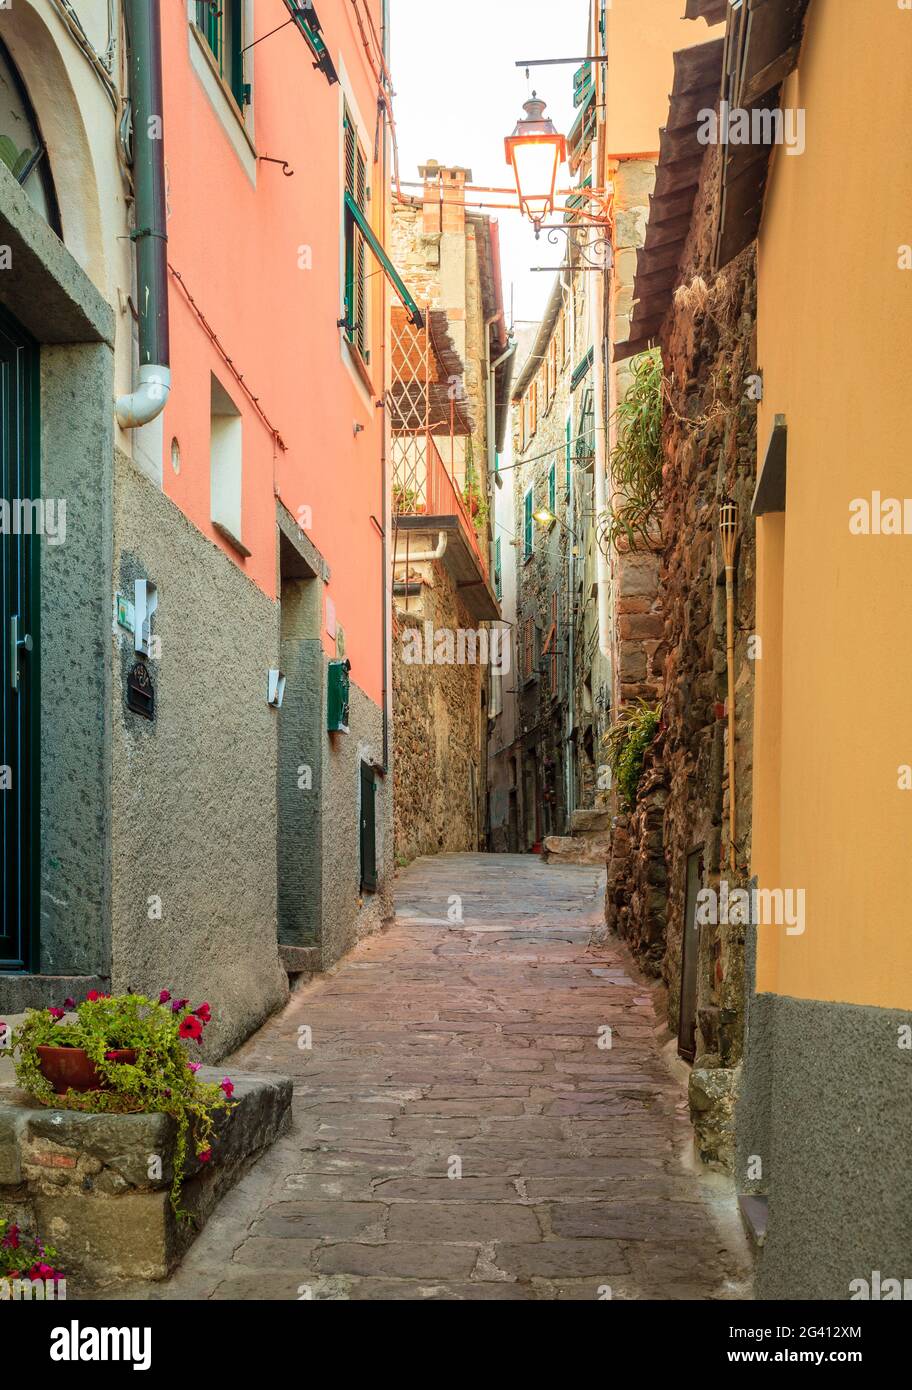 Narrow residential street in the village of Corniglia, Cinque Terre, Italy Stock Photo